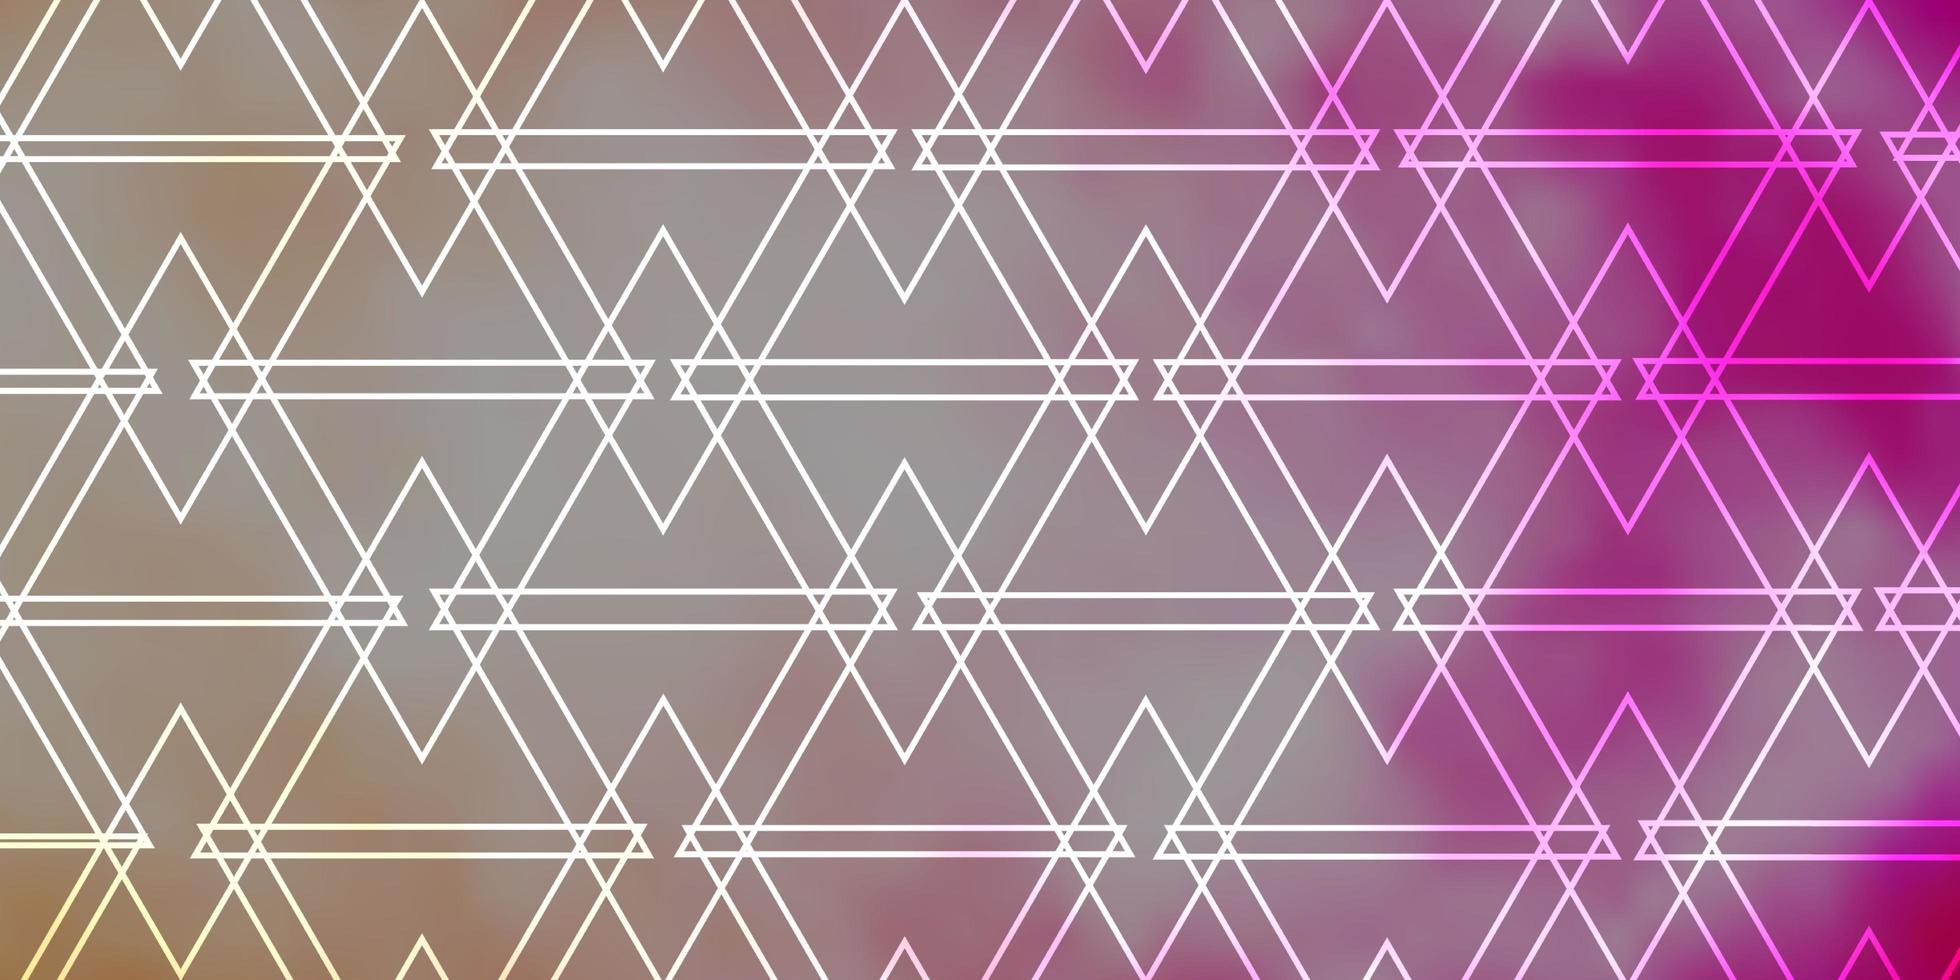 patrón de vector rosa claro con estilo poligonal.